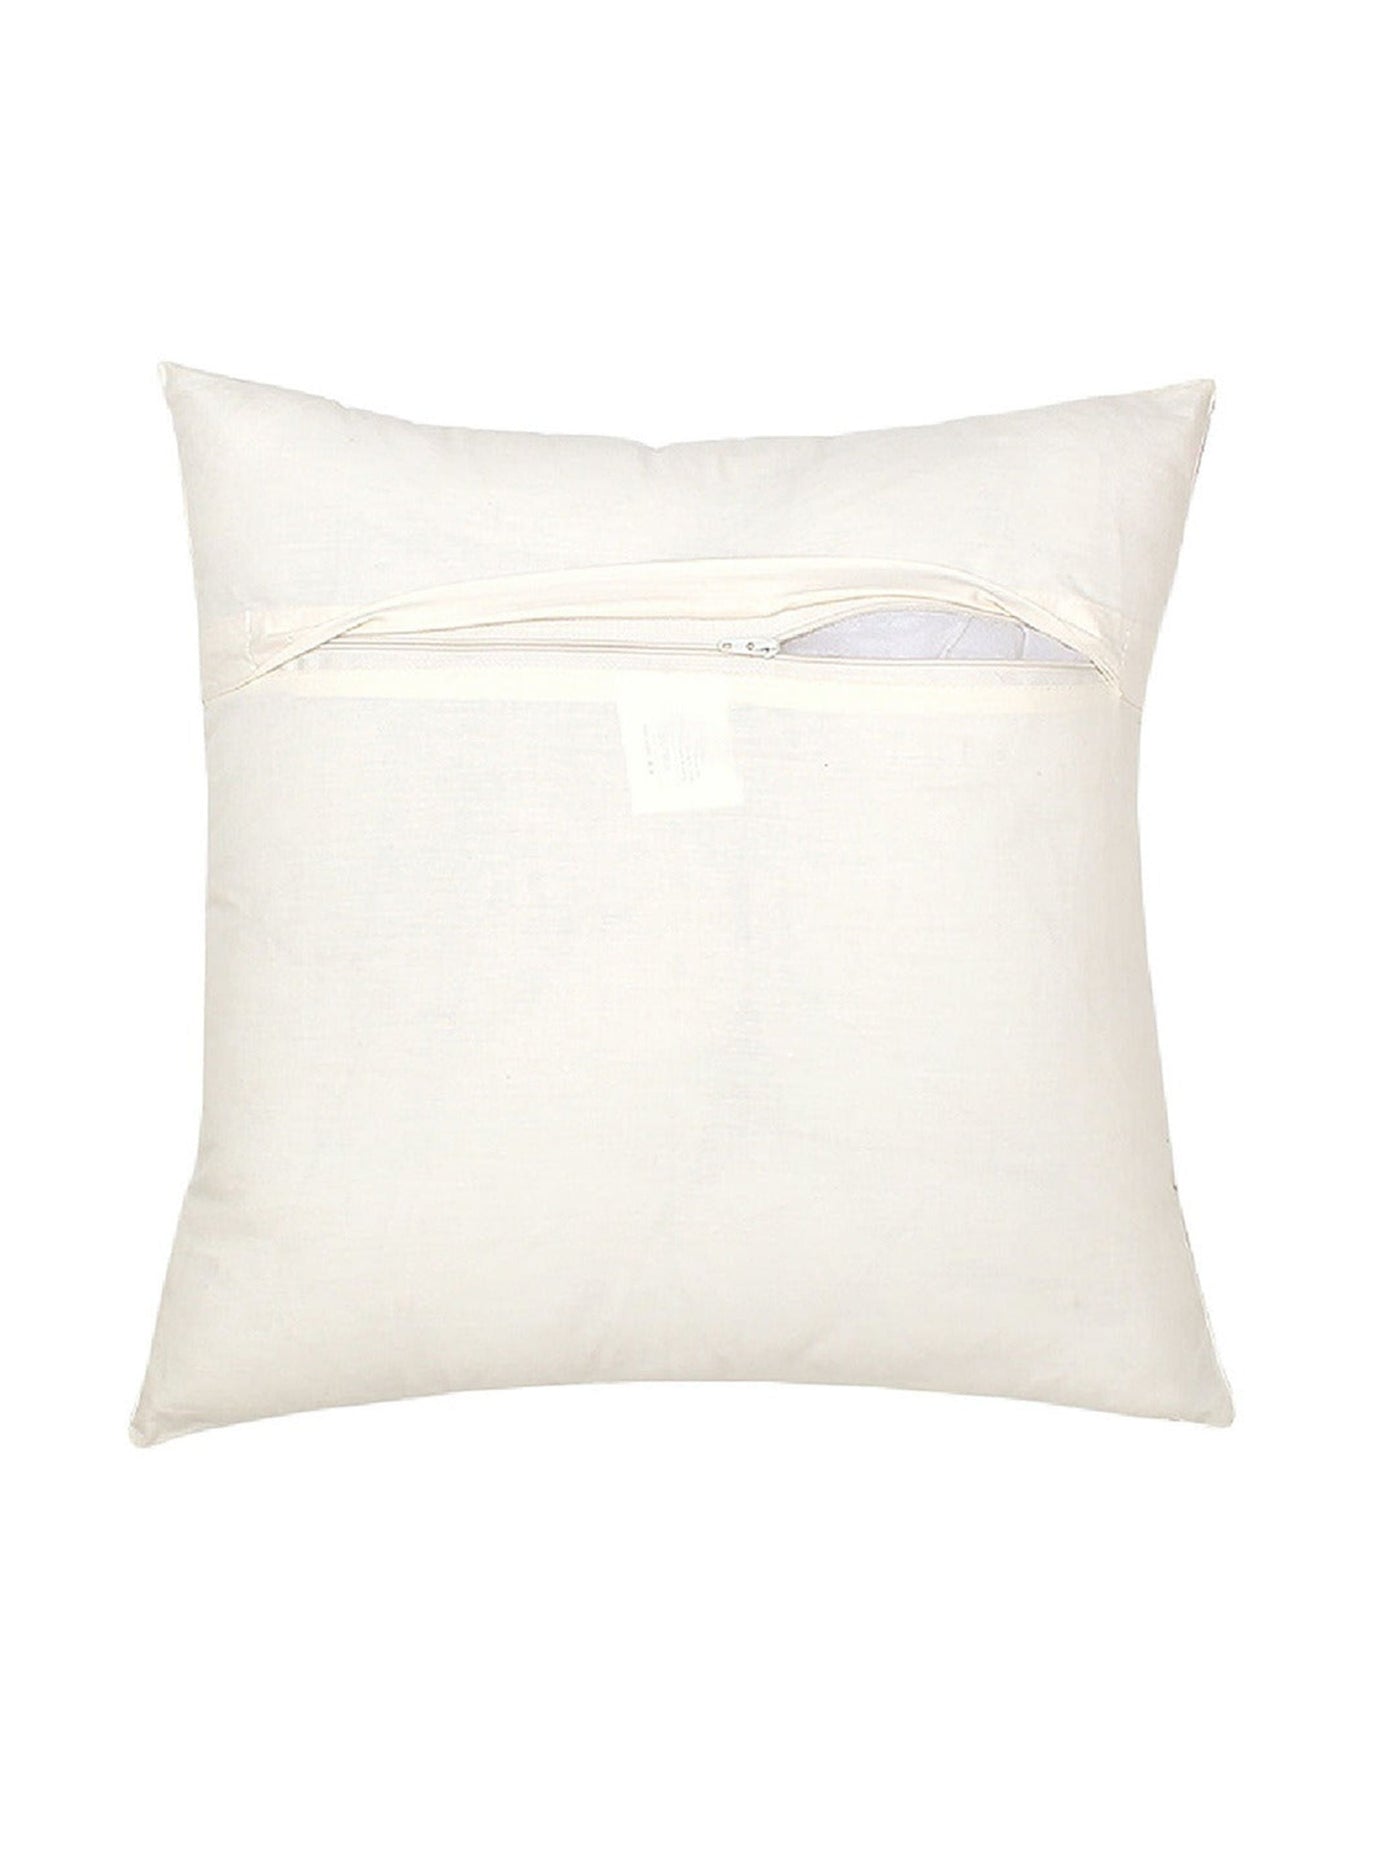 2 Cushion Covers - 2 s-8903773000890